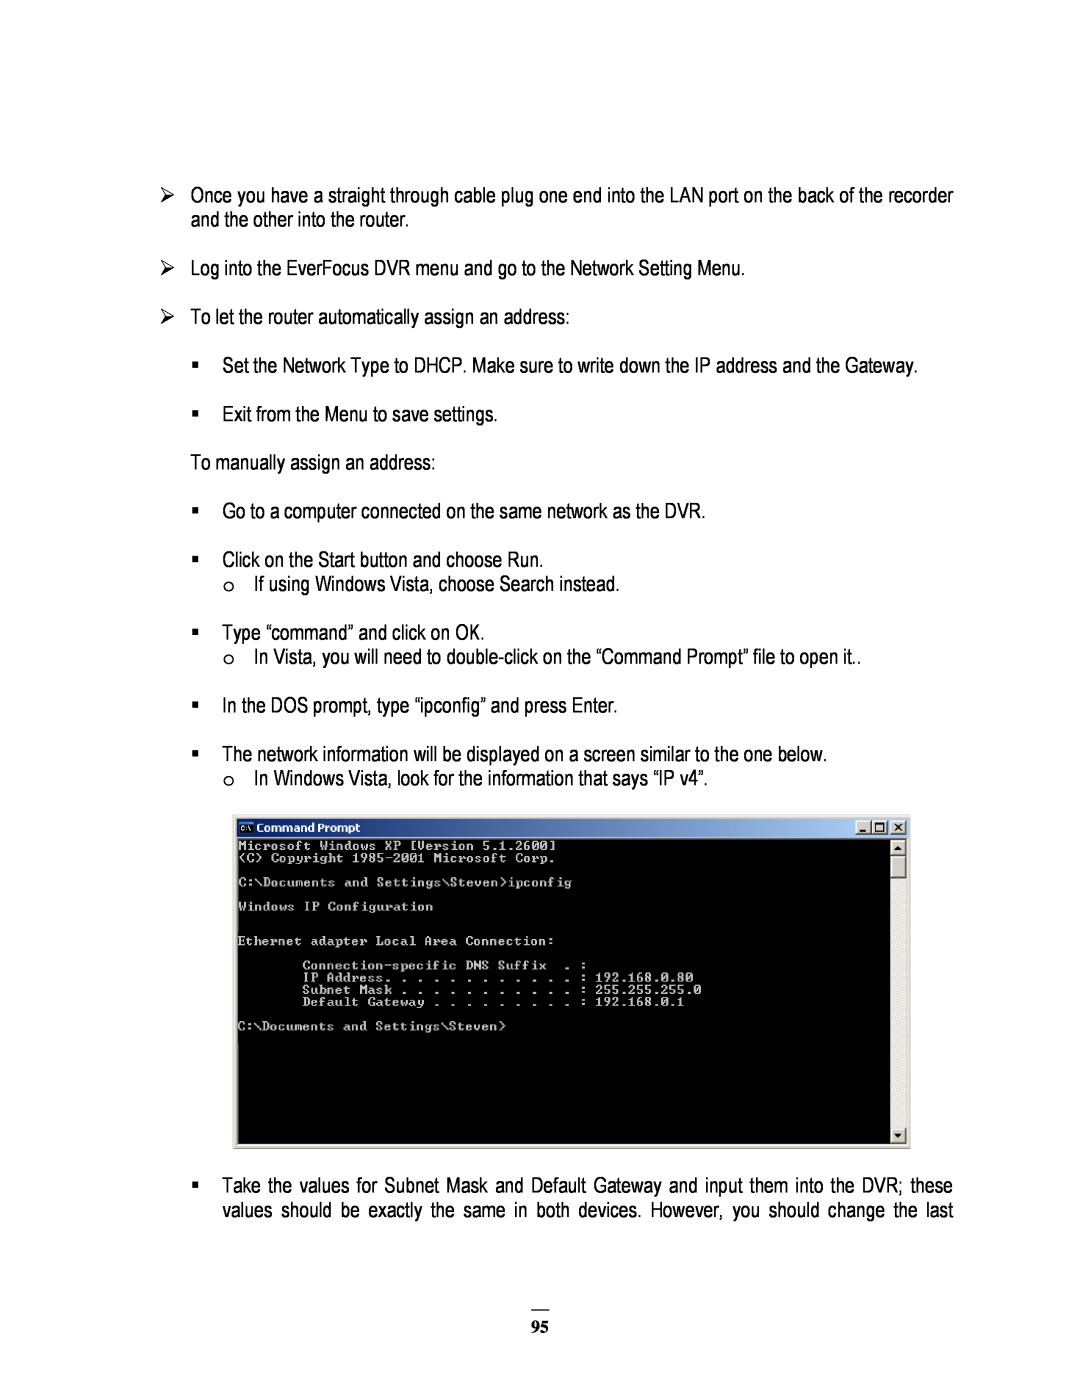 EverFocus ECOR264-4F1 Log into the EverFocus DVR menu and go to the Network Setting Menu, Type “command” and click on OK 